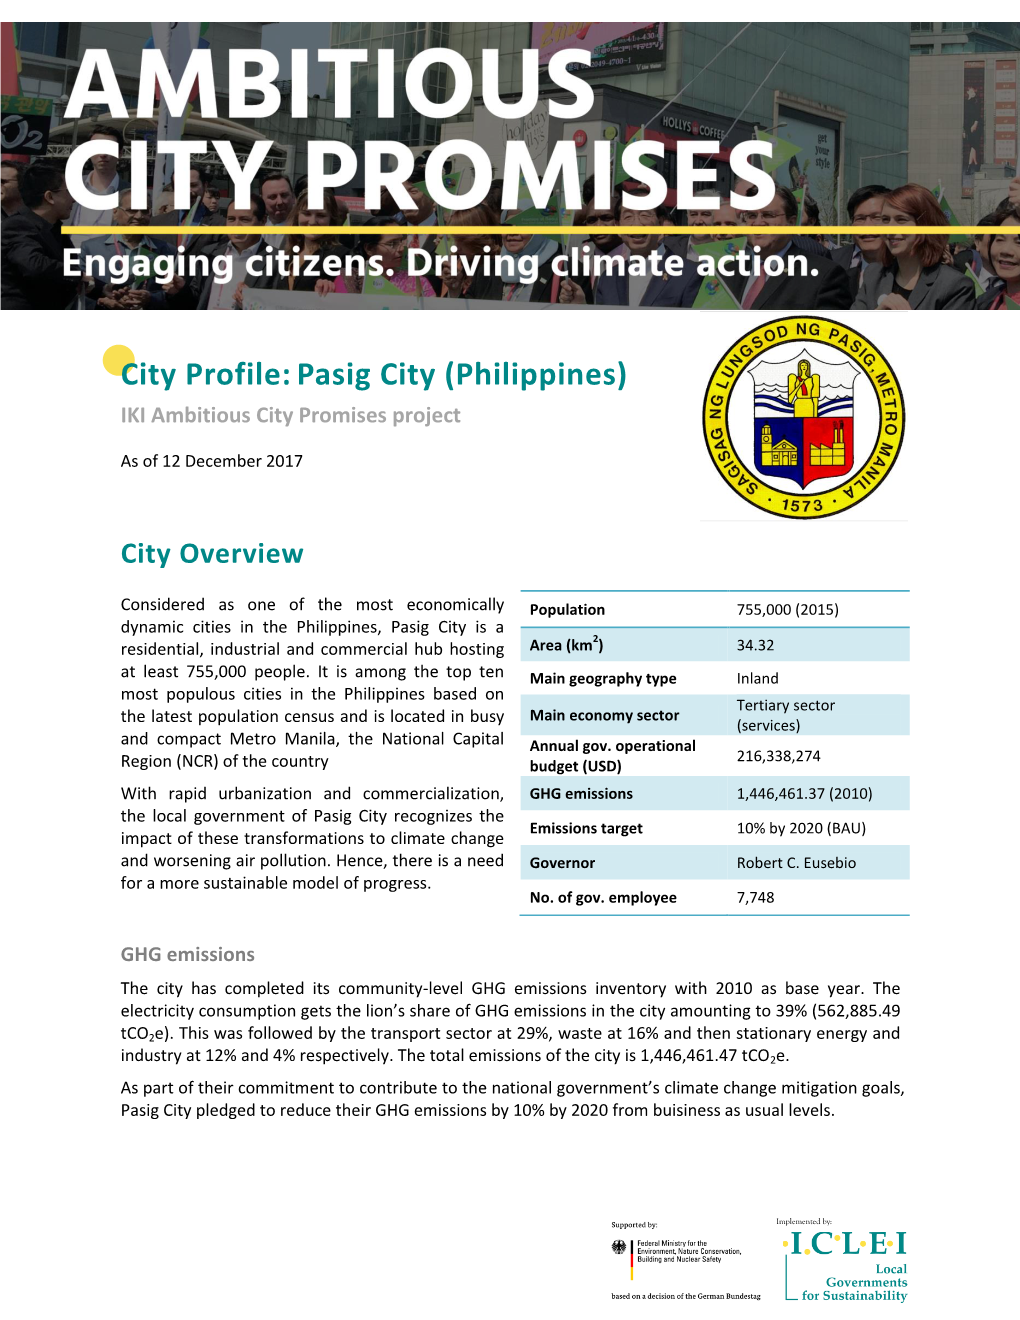 Pasig City, Philippines